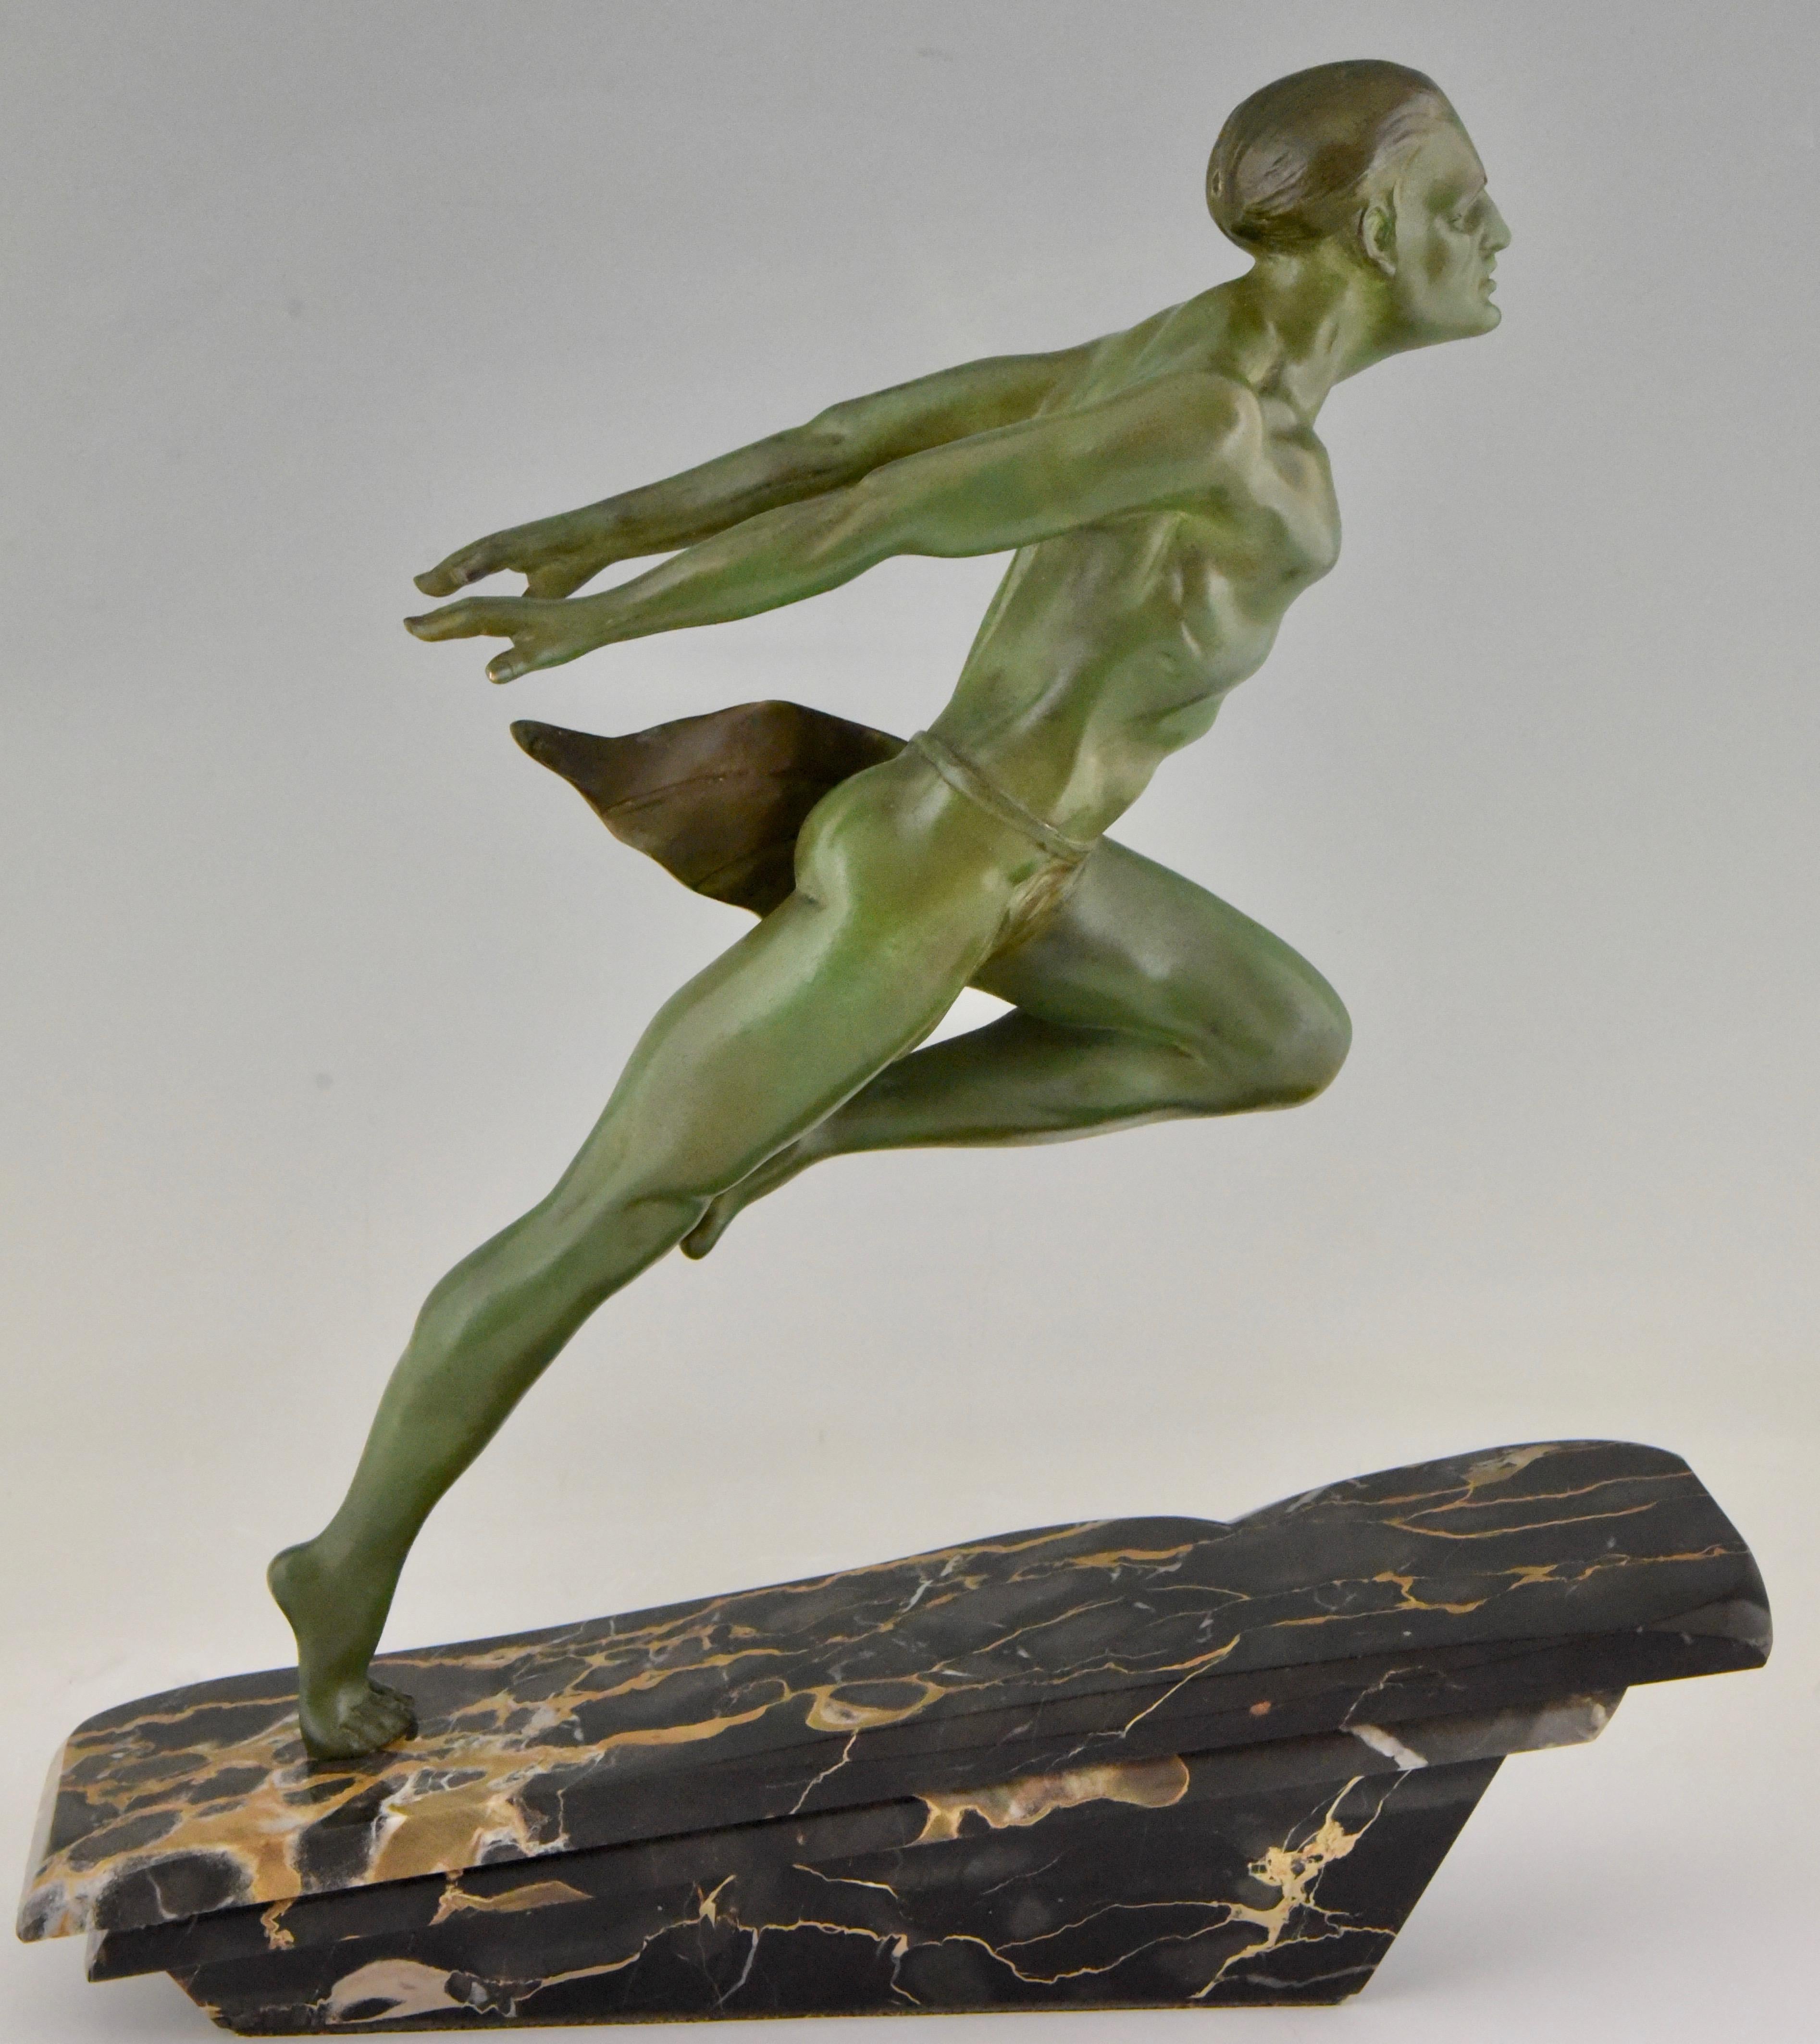 20th Century Art Deco Sculpture Running Man or Athlete L. Valderi, France, 1930